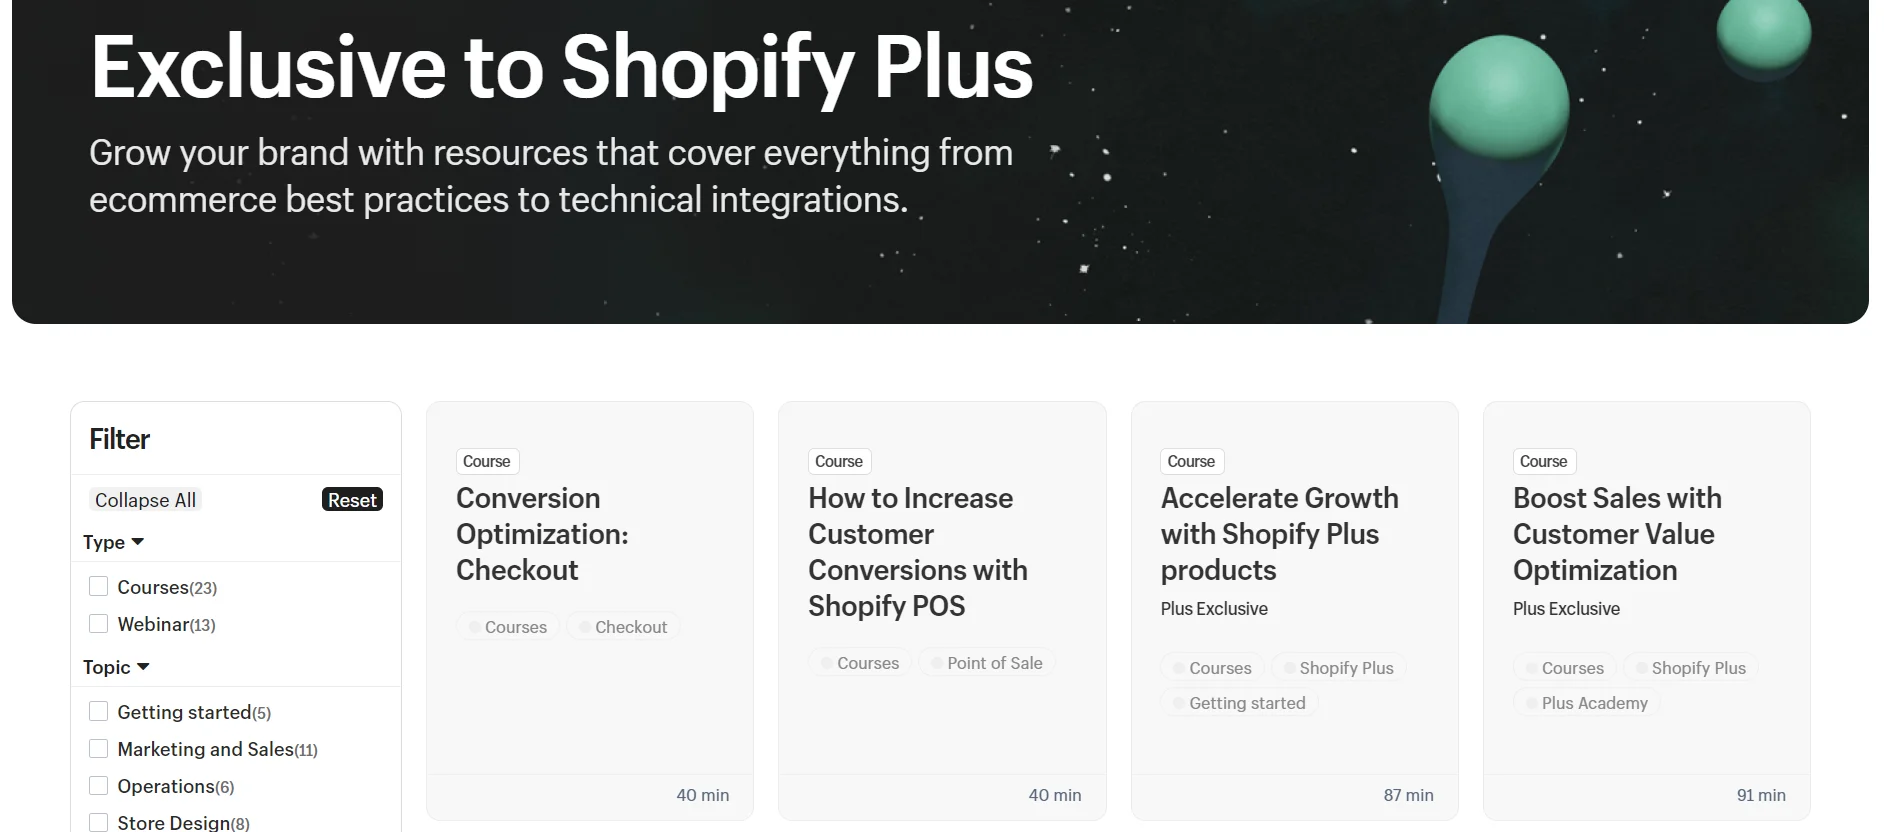 Shopify Plus Academy